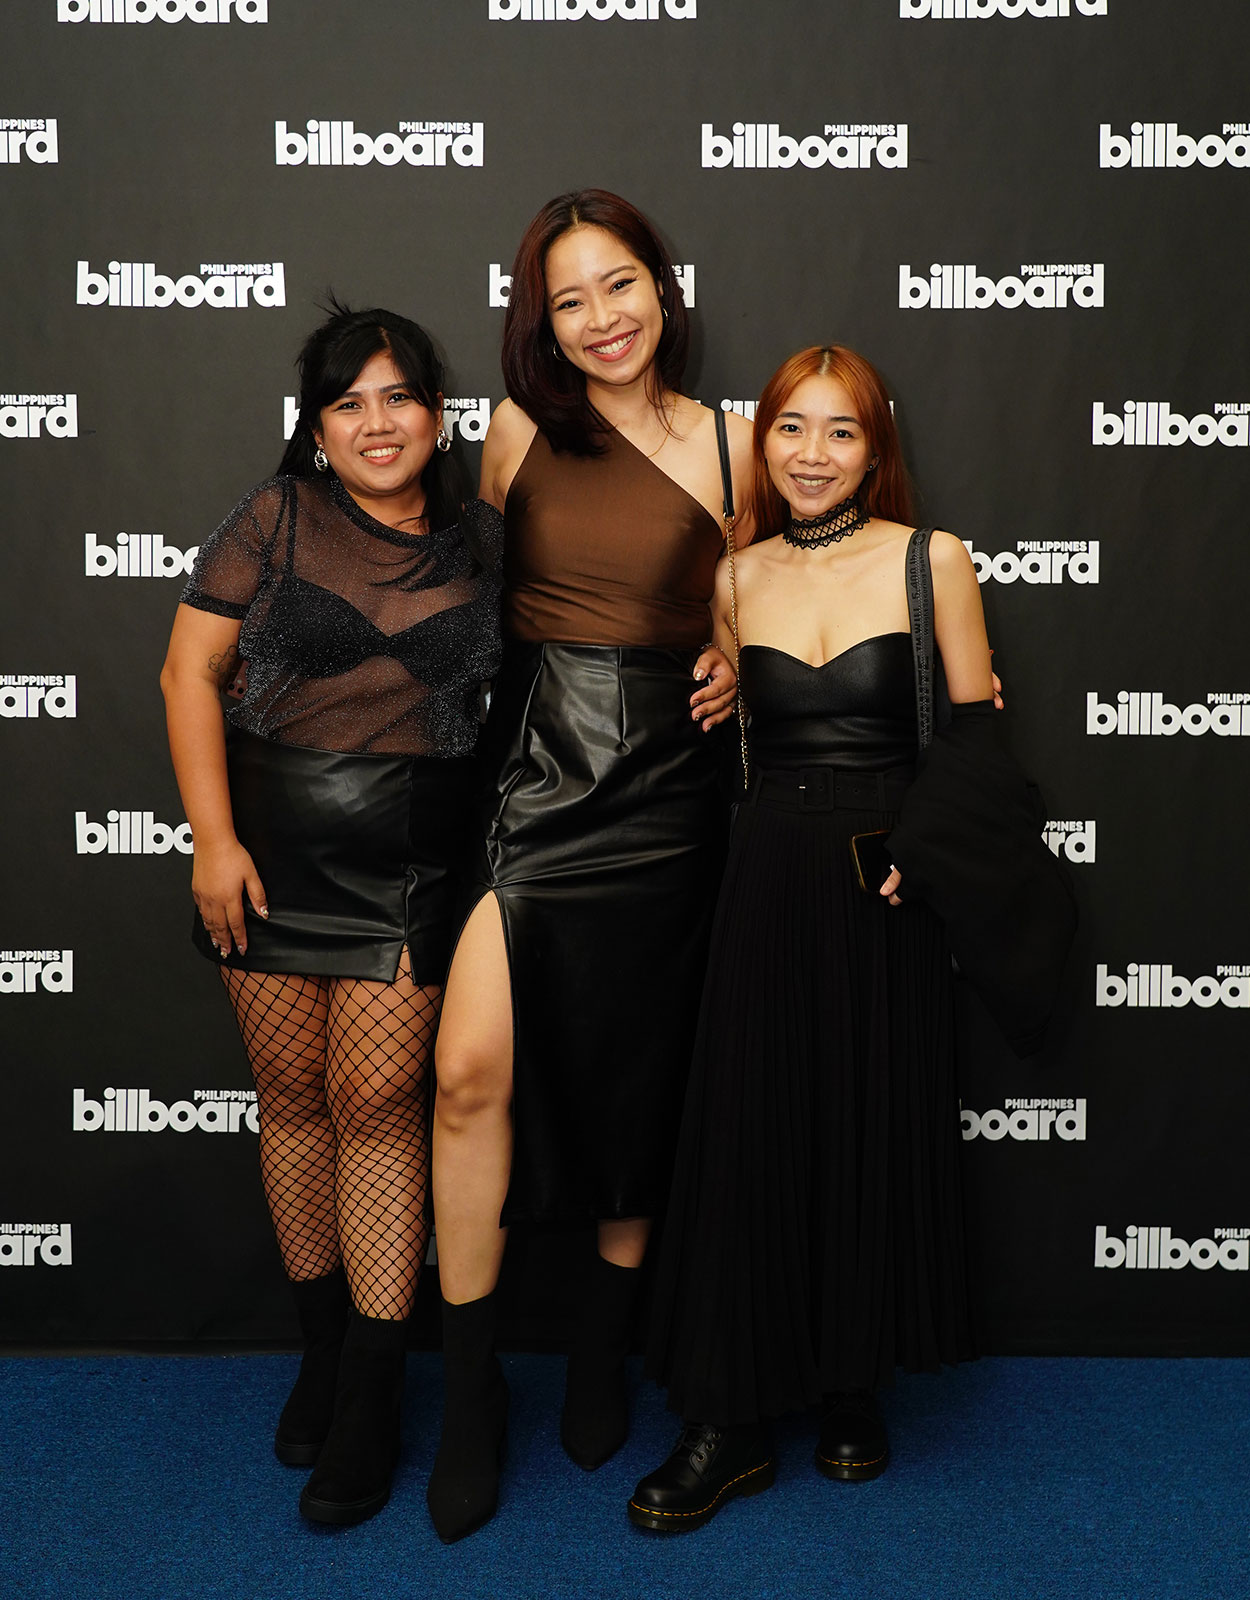 Mela Ballano, Label Head of Star Music; Naomi Enriquez, Head of International Marketing & Partnerships of ABS-CBN Music; and Marey Garcia, Label Head of Tarsier Records